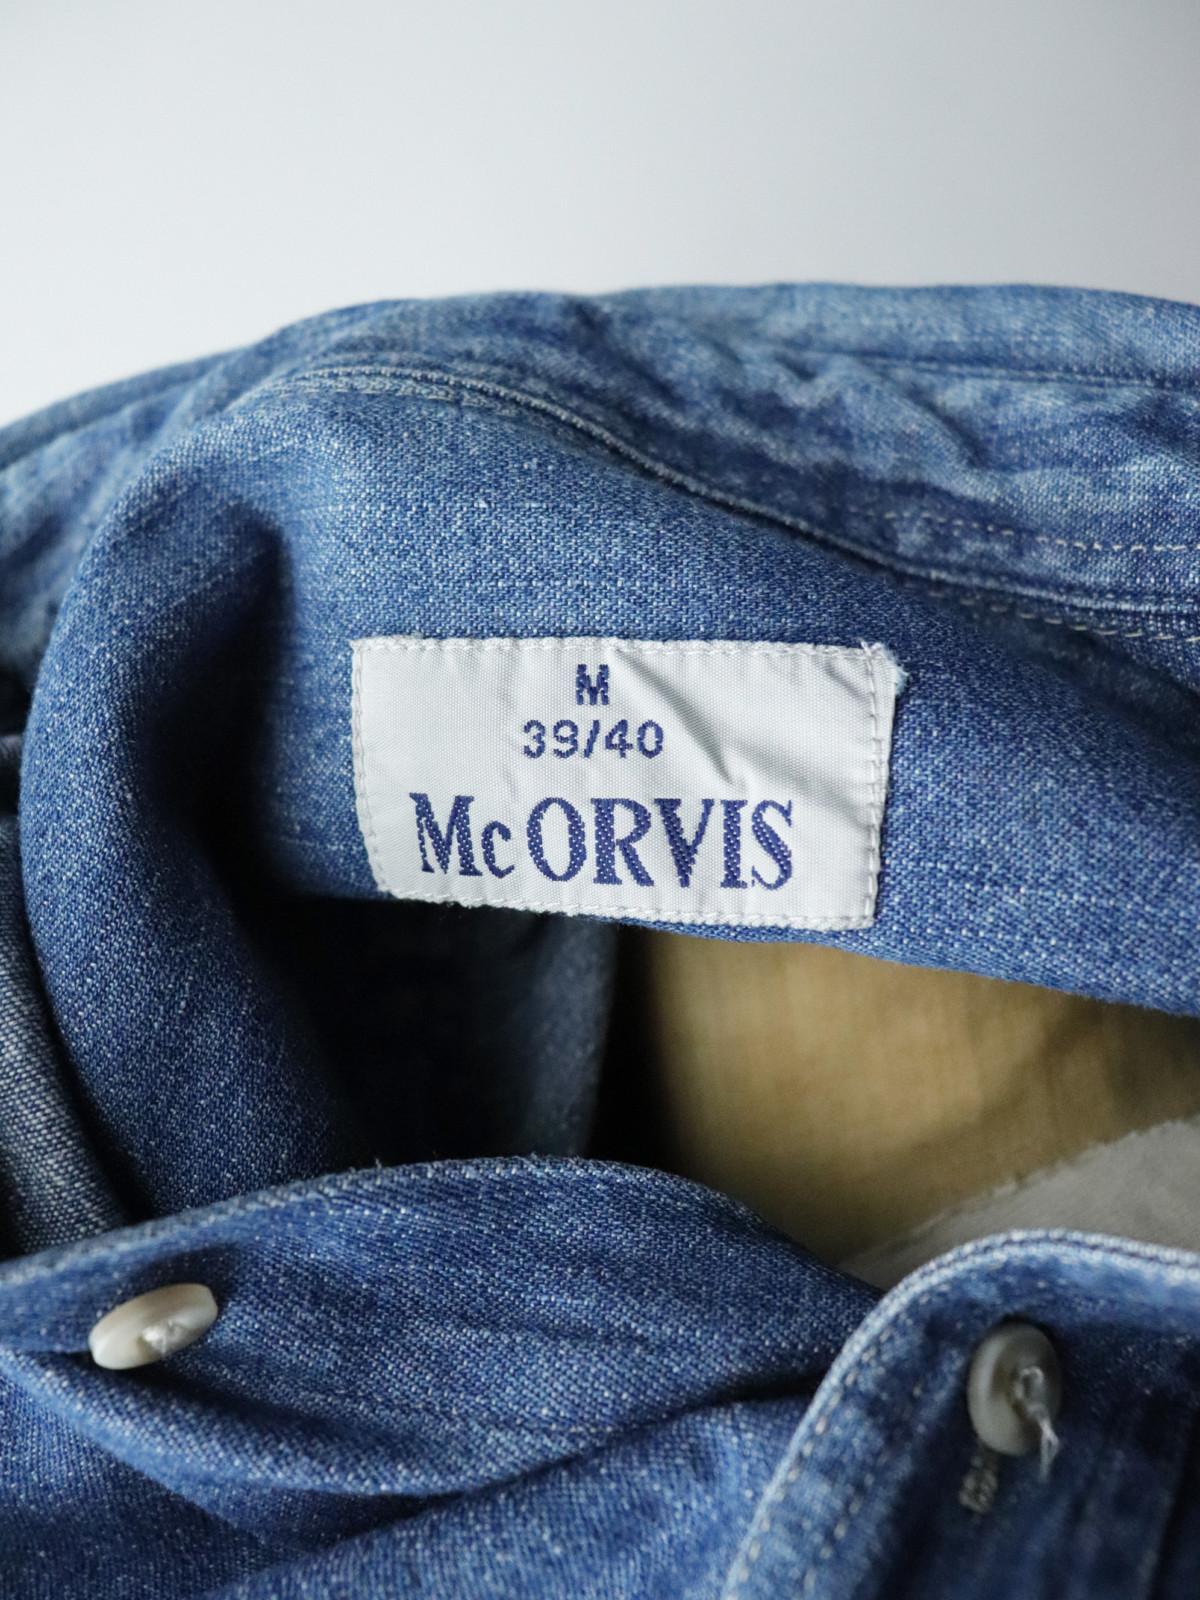 Mc ORVIS, denim shirts, Germany